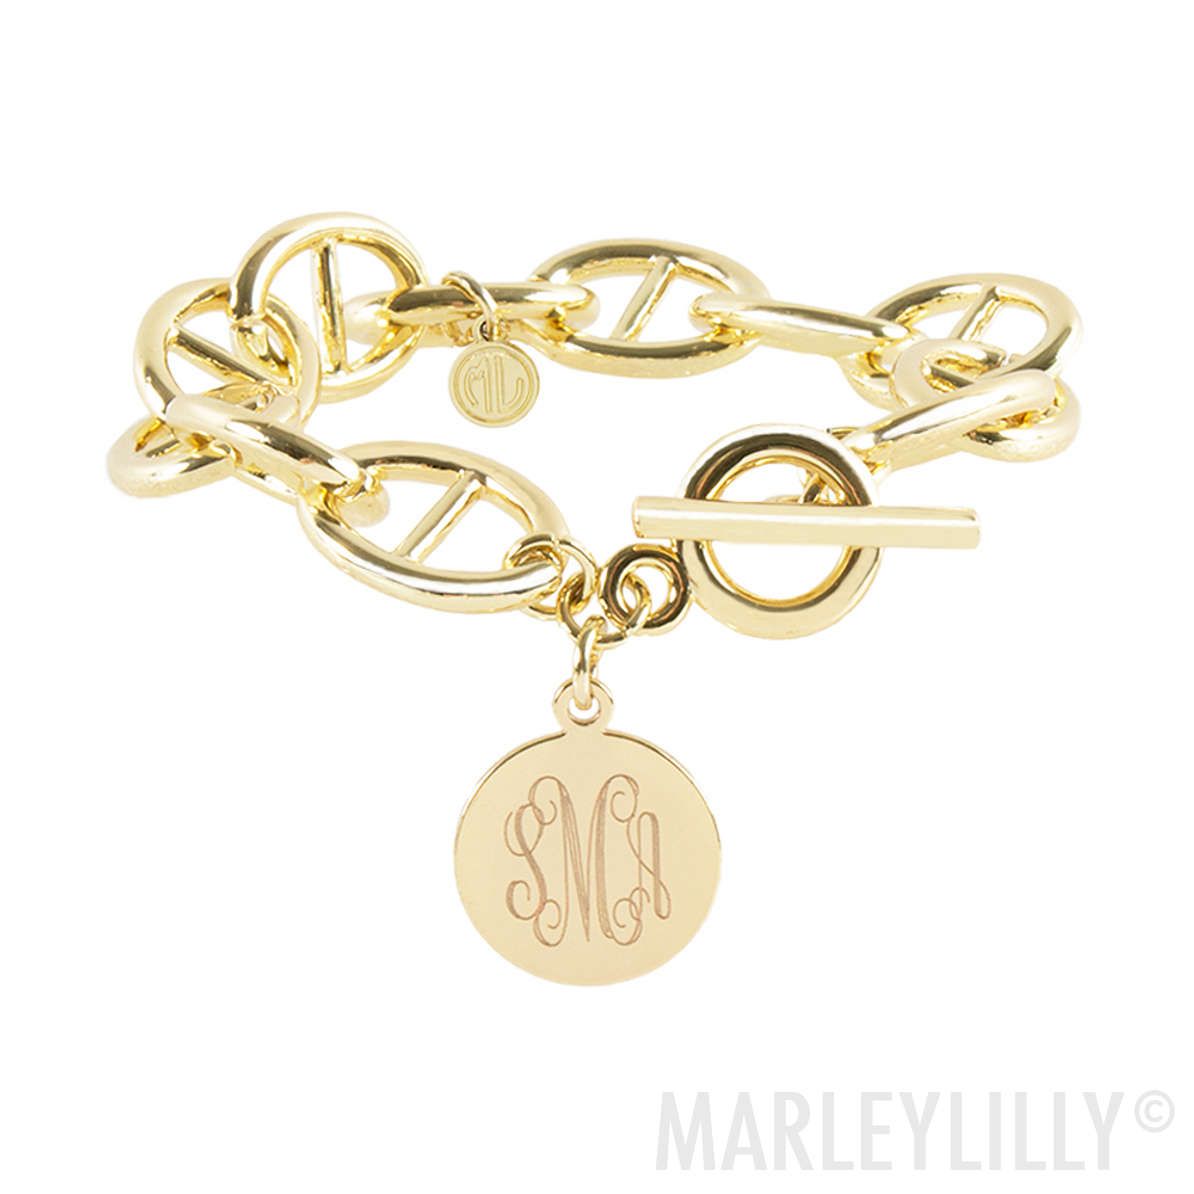 Monogrammed Pendant Bracelet | Marleylilly